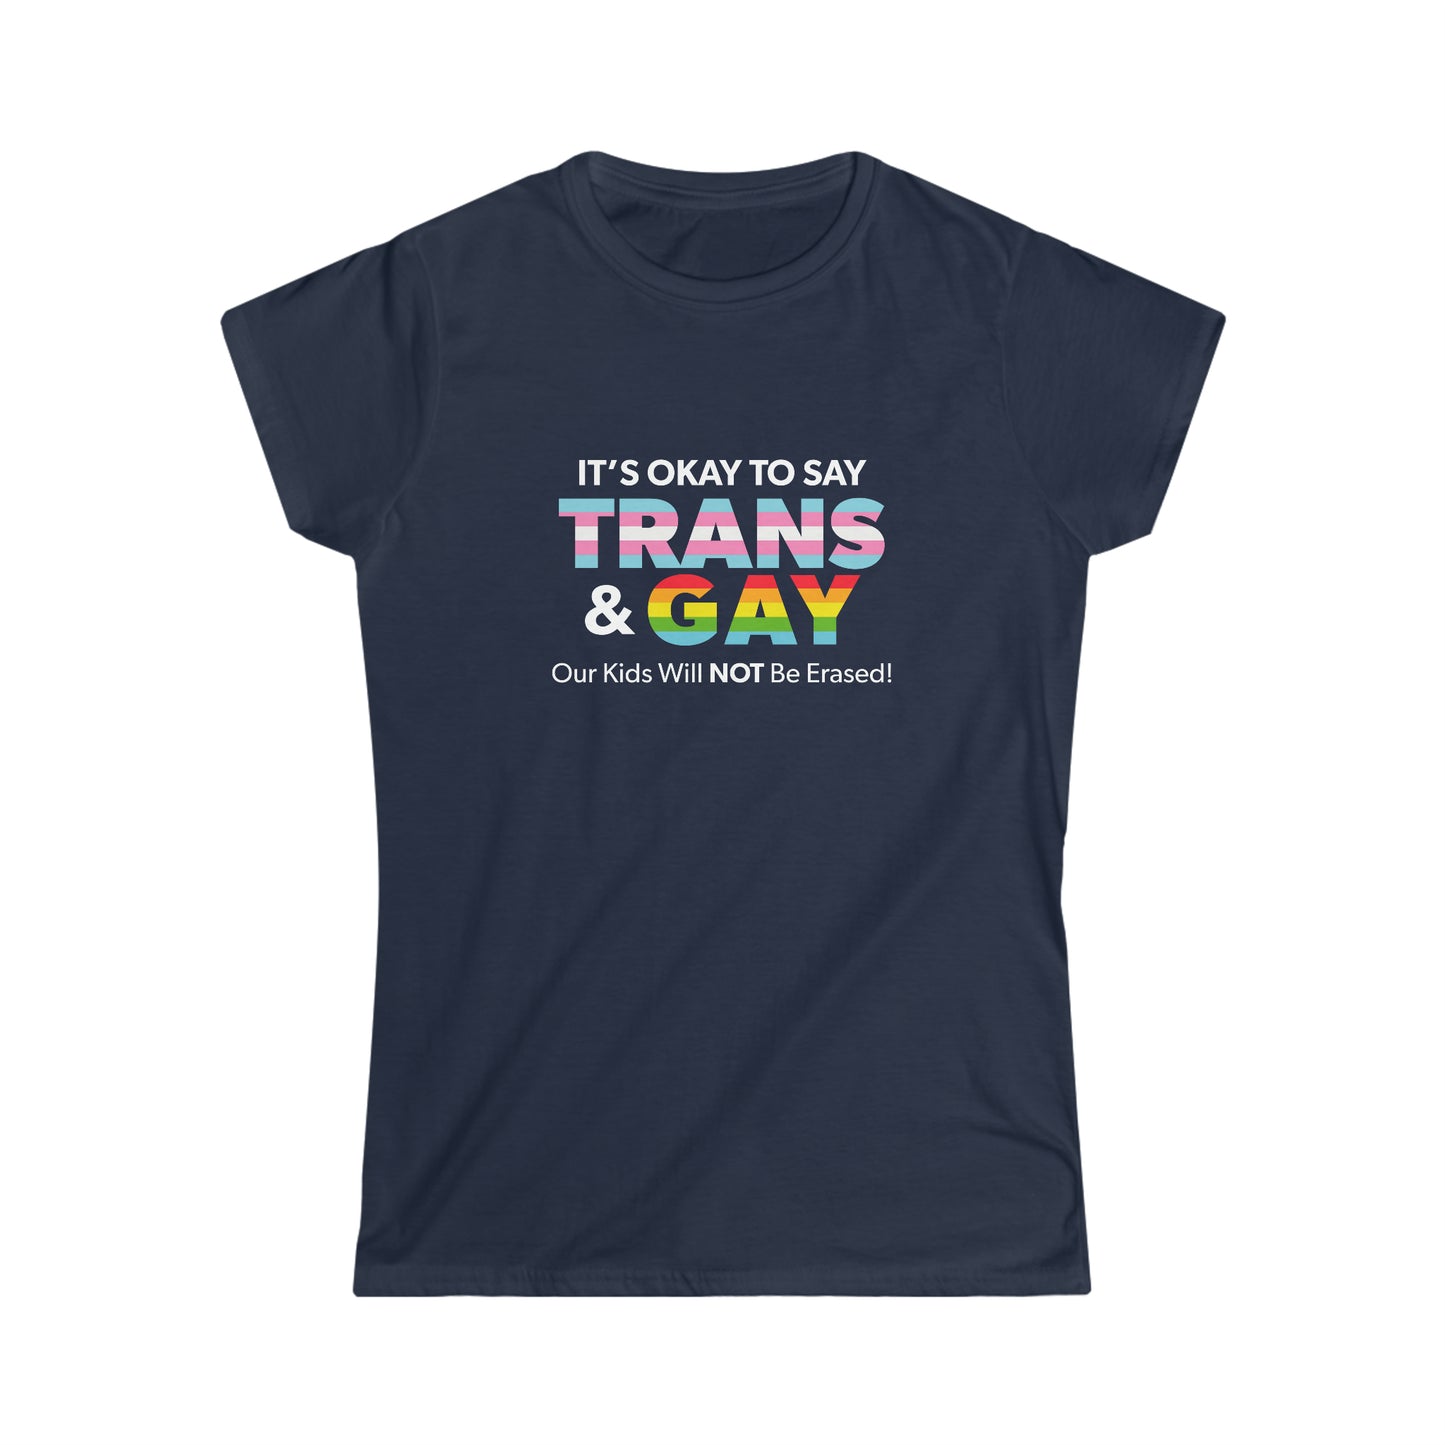 “It’s Okay to Say Trans & Gay” Women’s T-Shirts